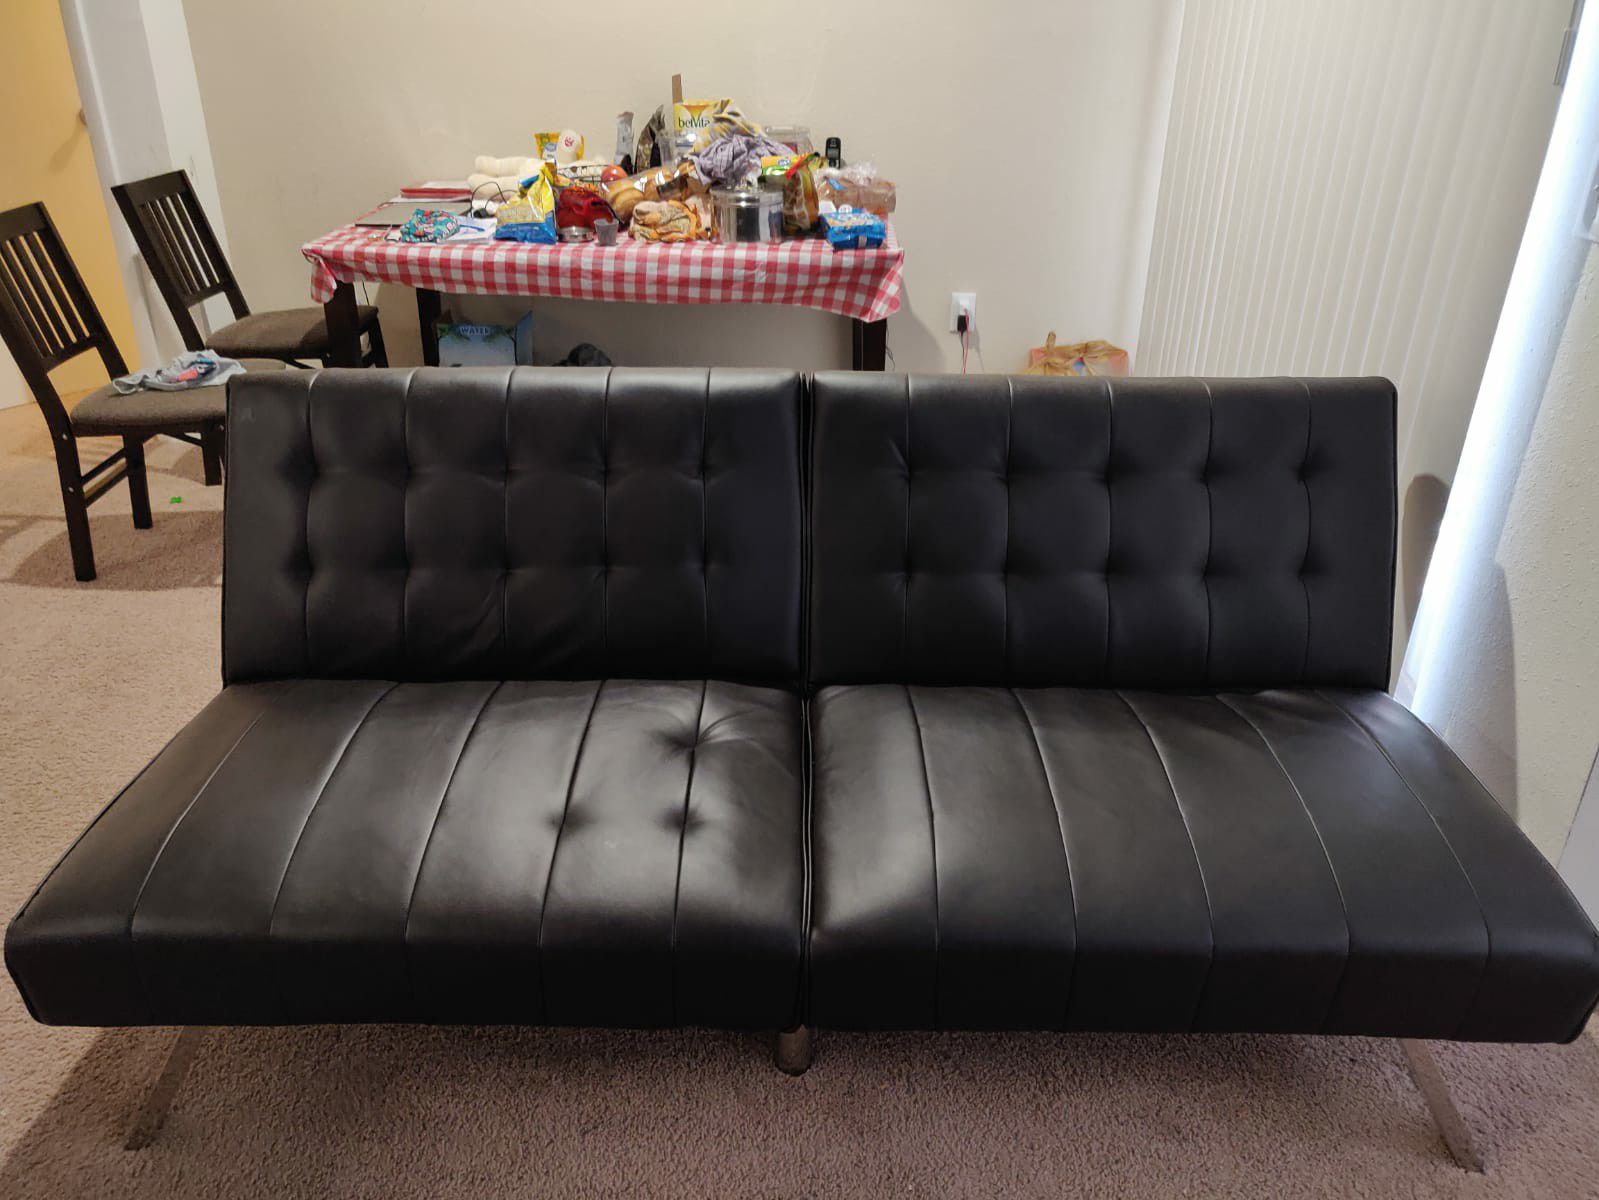 Like new Mainstays futon sofa - 2 months used